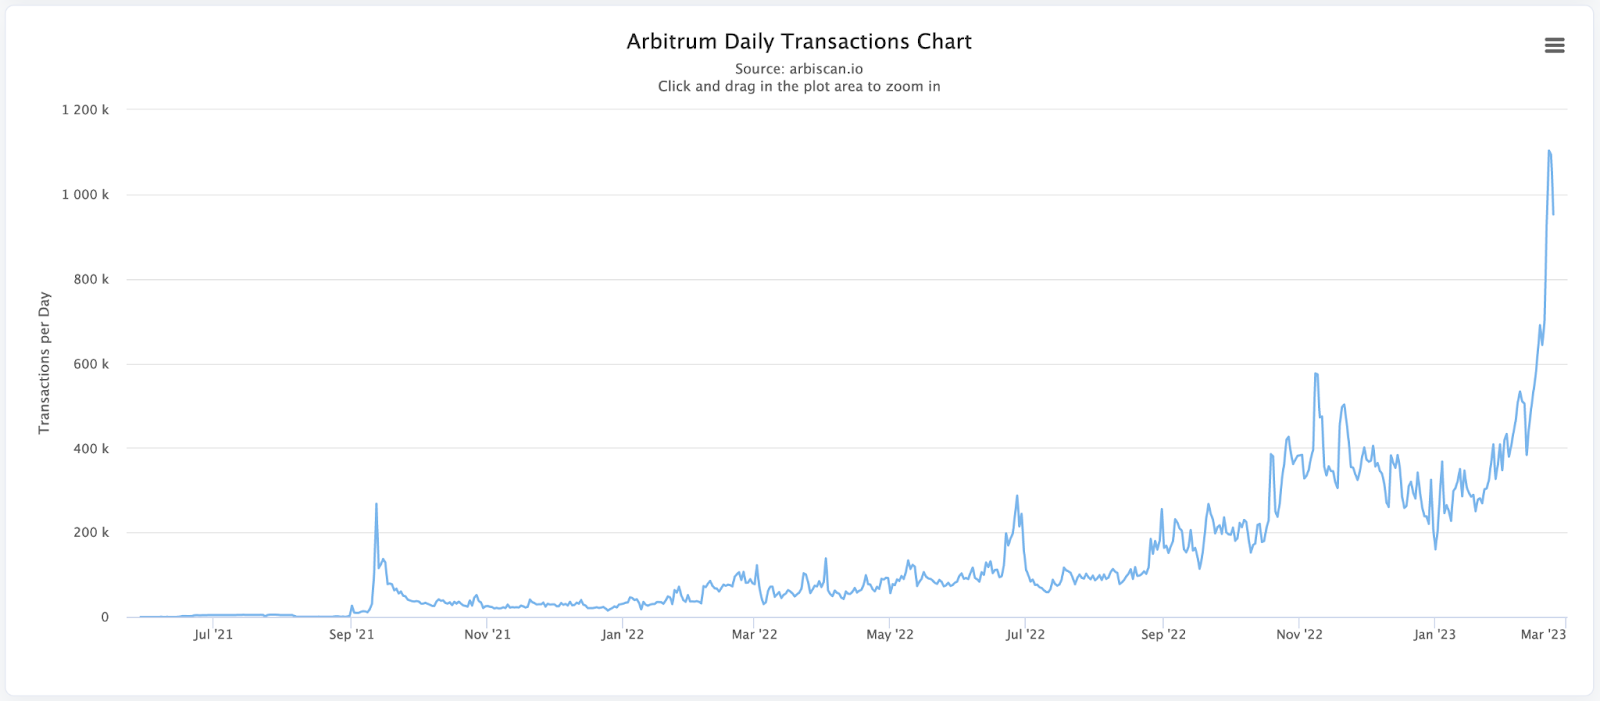 Transactions on Arbitrum Leapfrog Ethereum